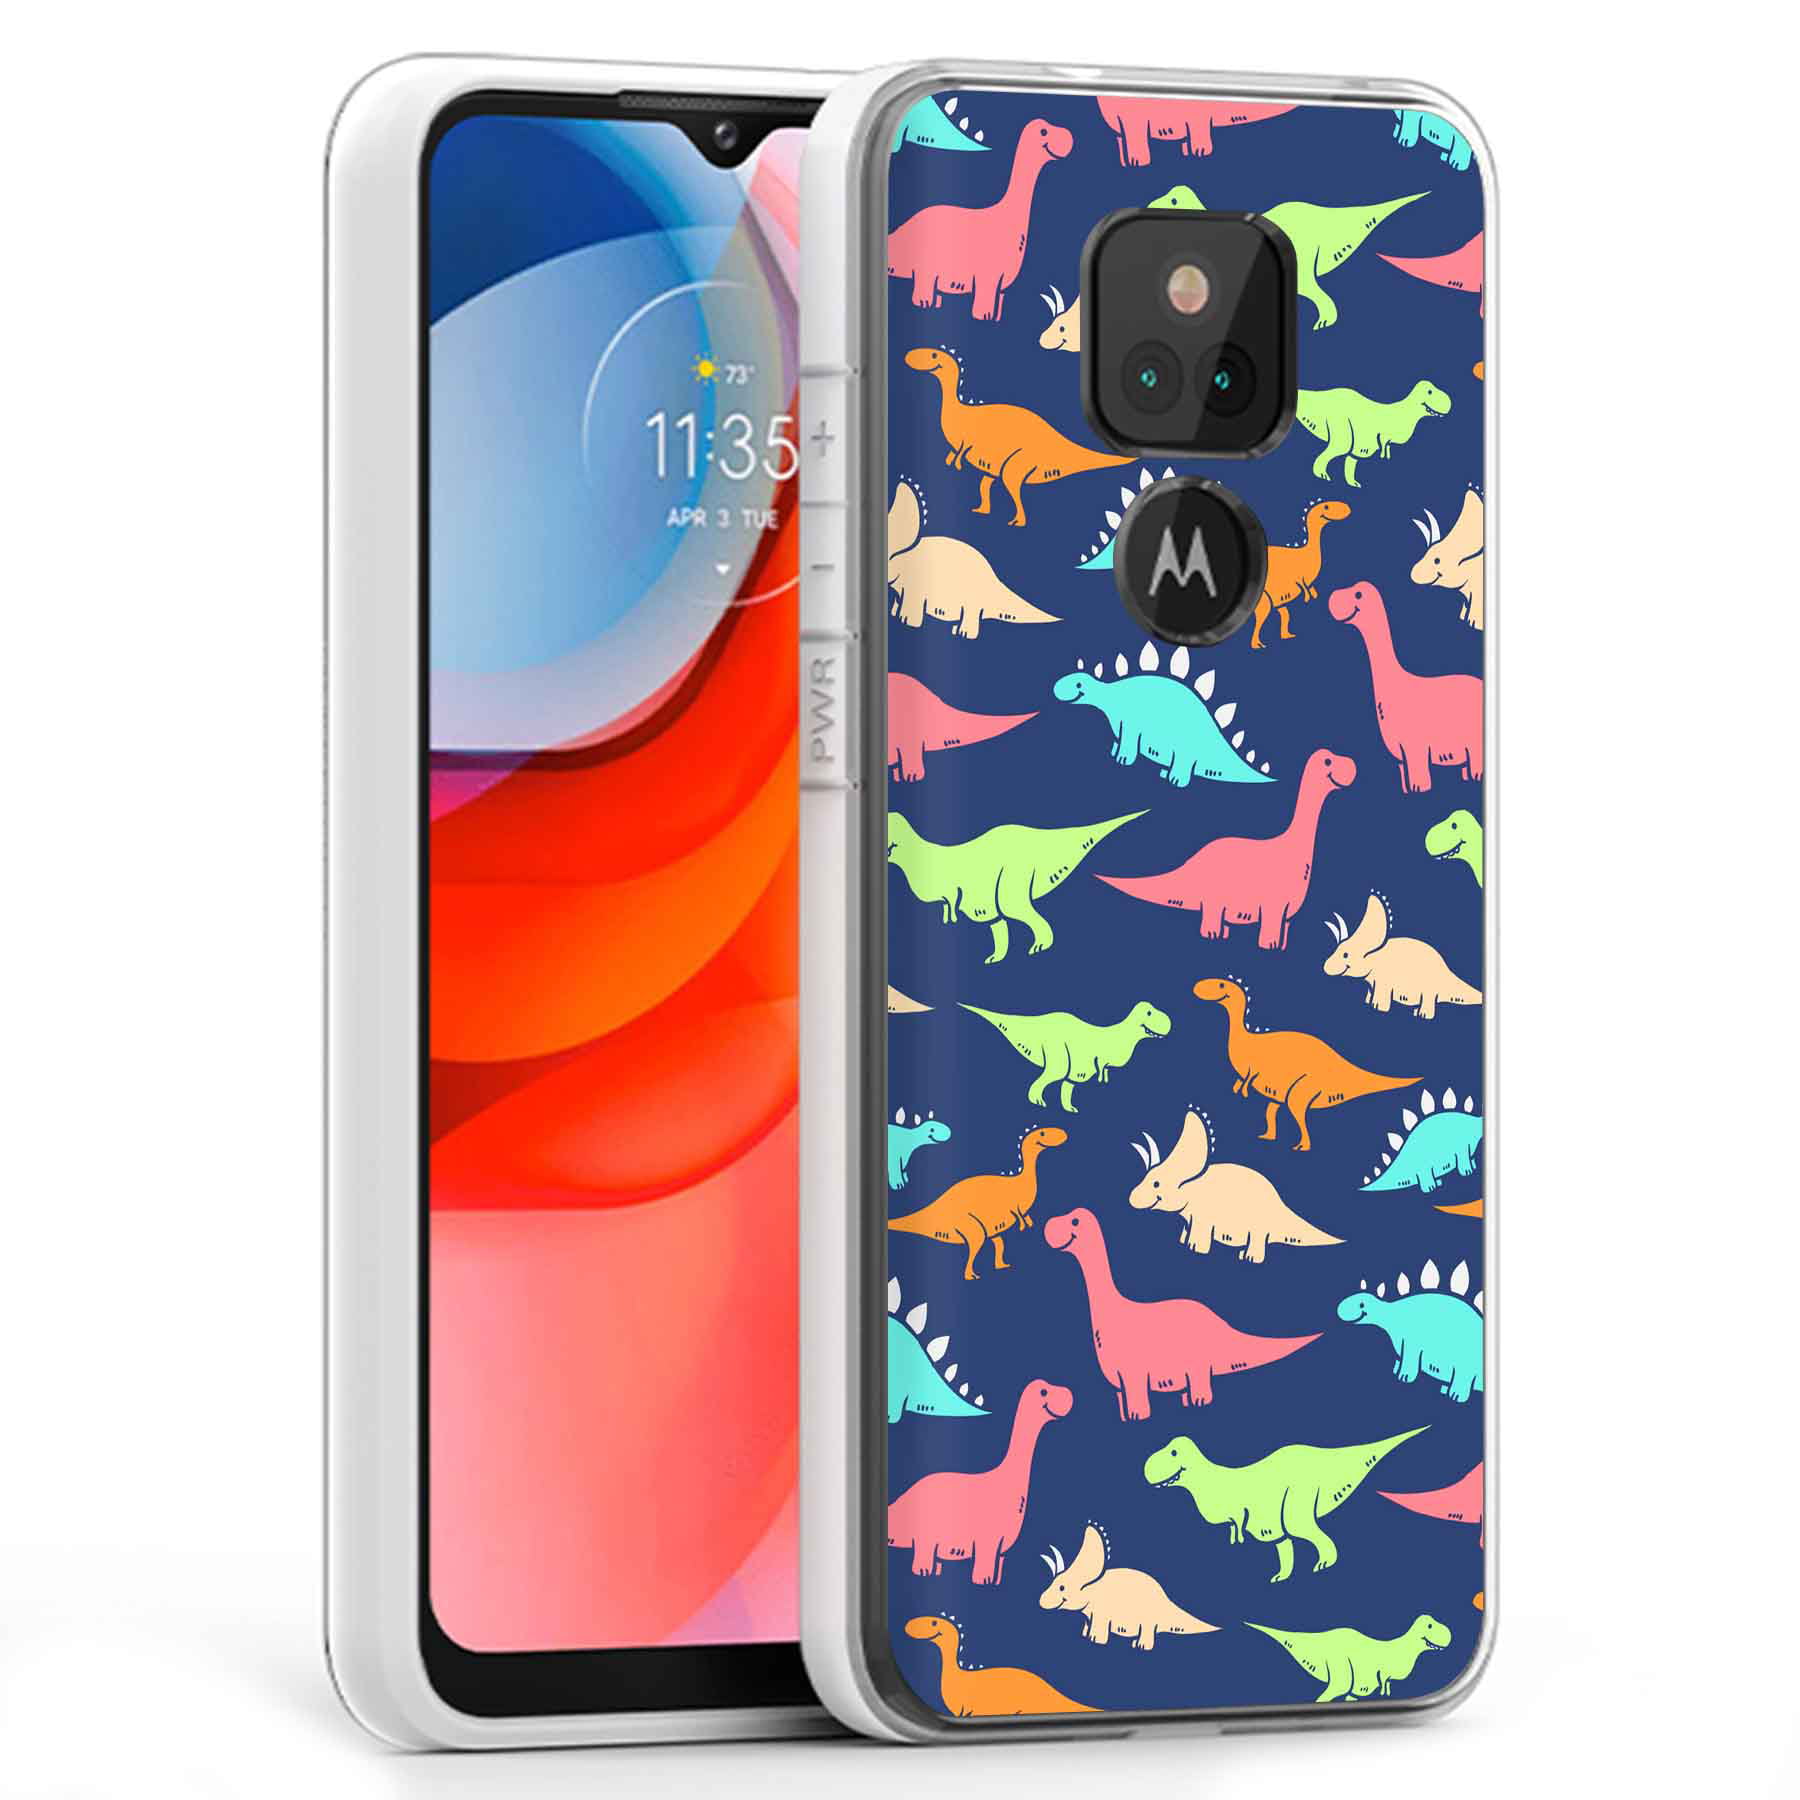 Streng Mok Nadenkend TalkingCase Slim Phone Case Cover Compatible for Motorola Moto G Play  2021,Dinosaur 1 Print,Lightweight, Flexible, Soft, USA - Walmart.com